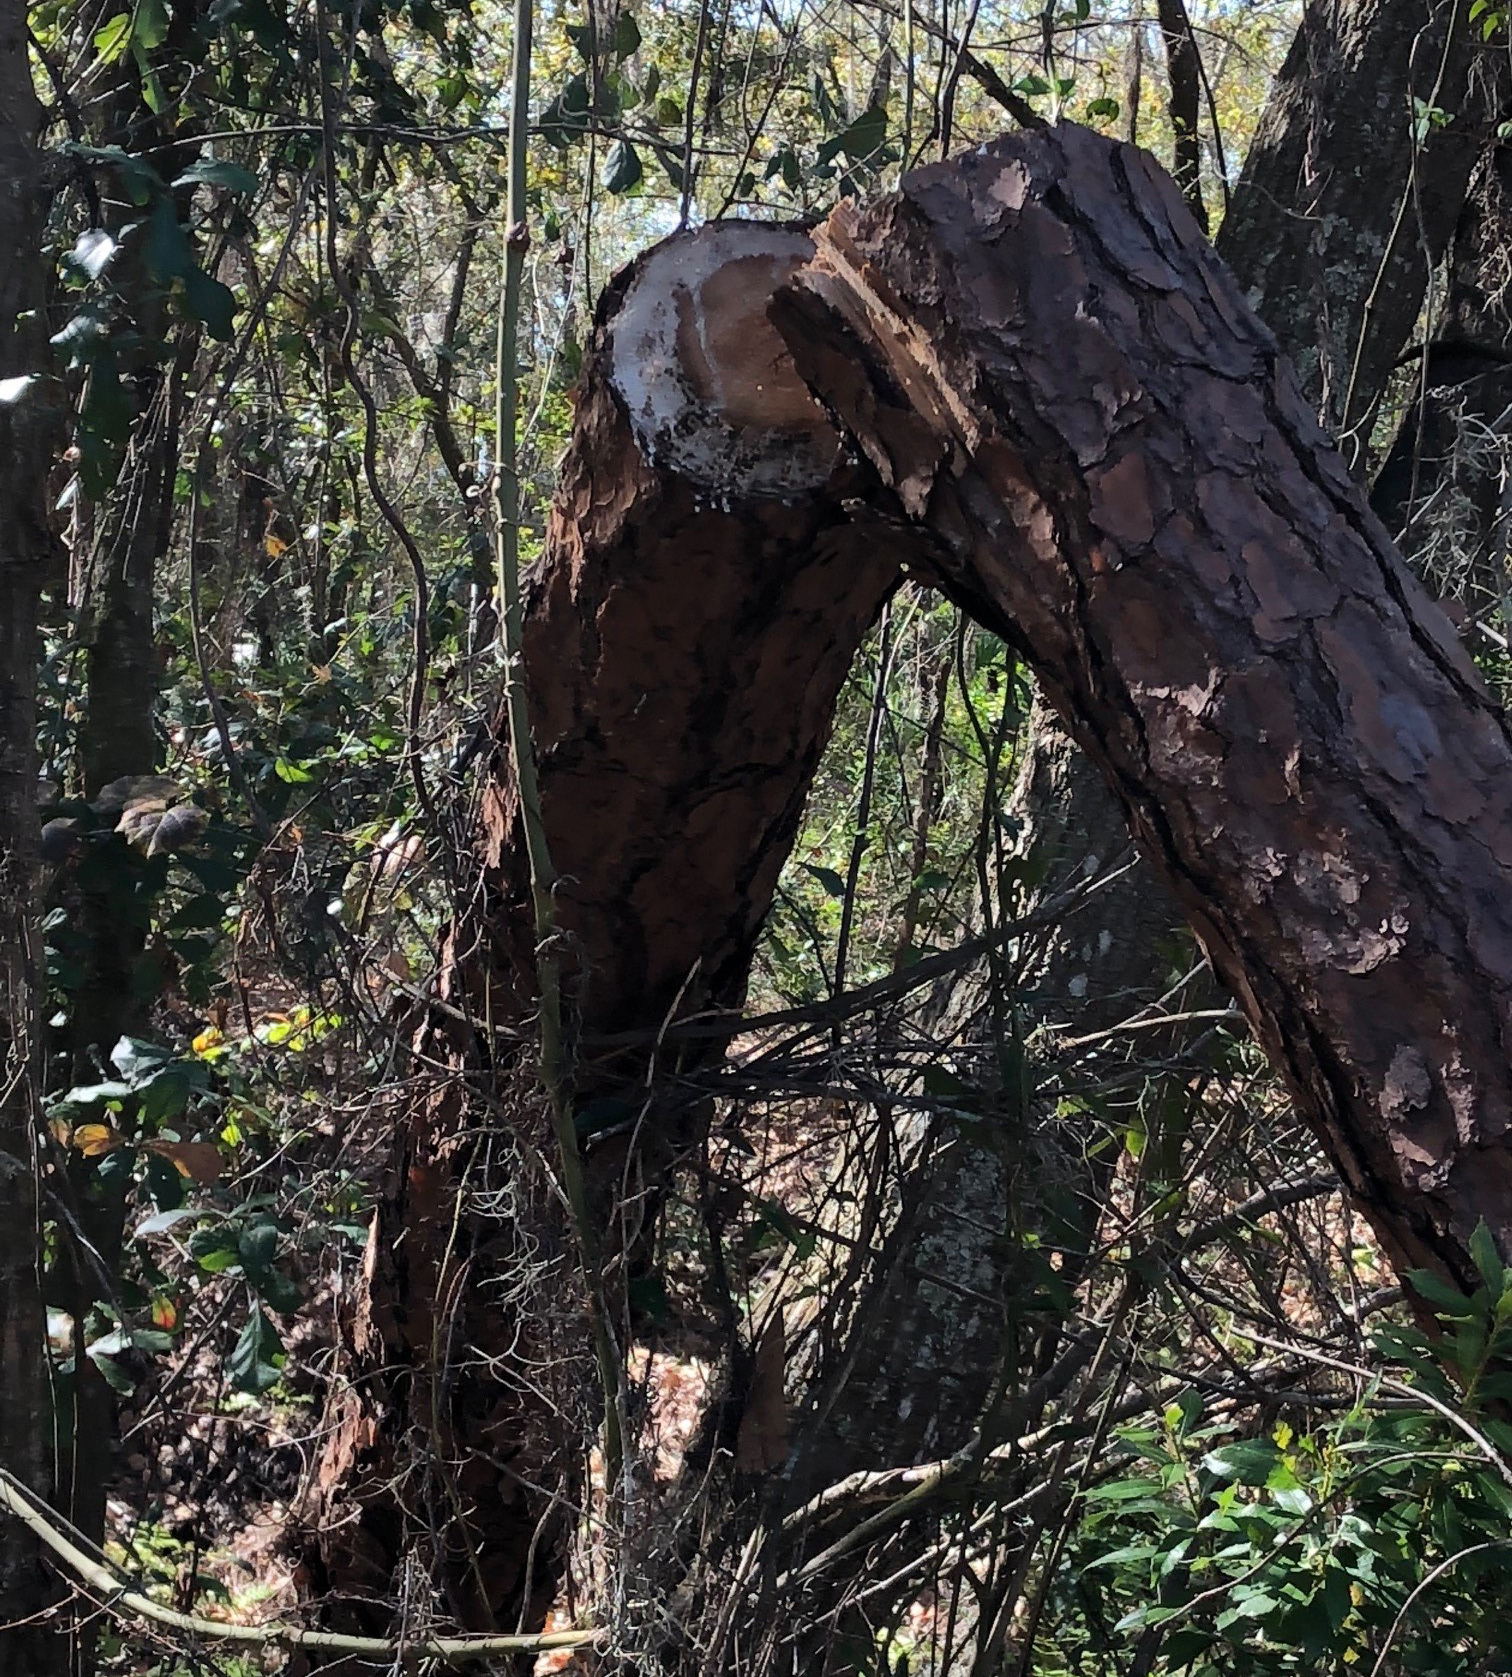 Fish Hawk Trails - Hillsborough County Tree Cutting Regulations